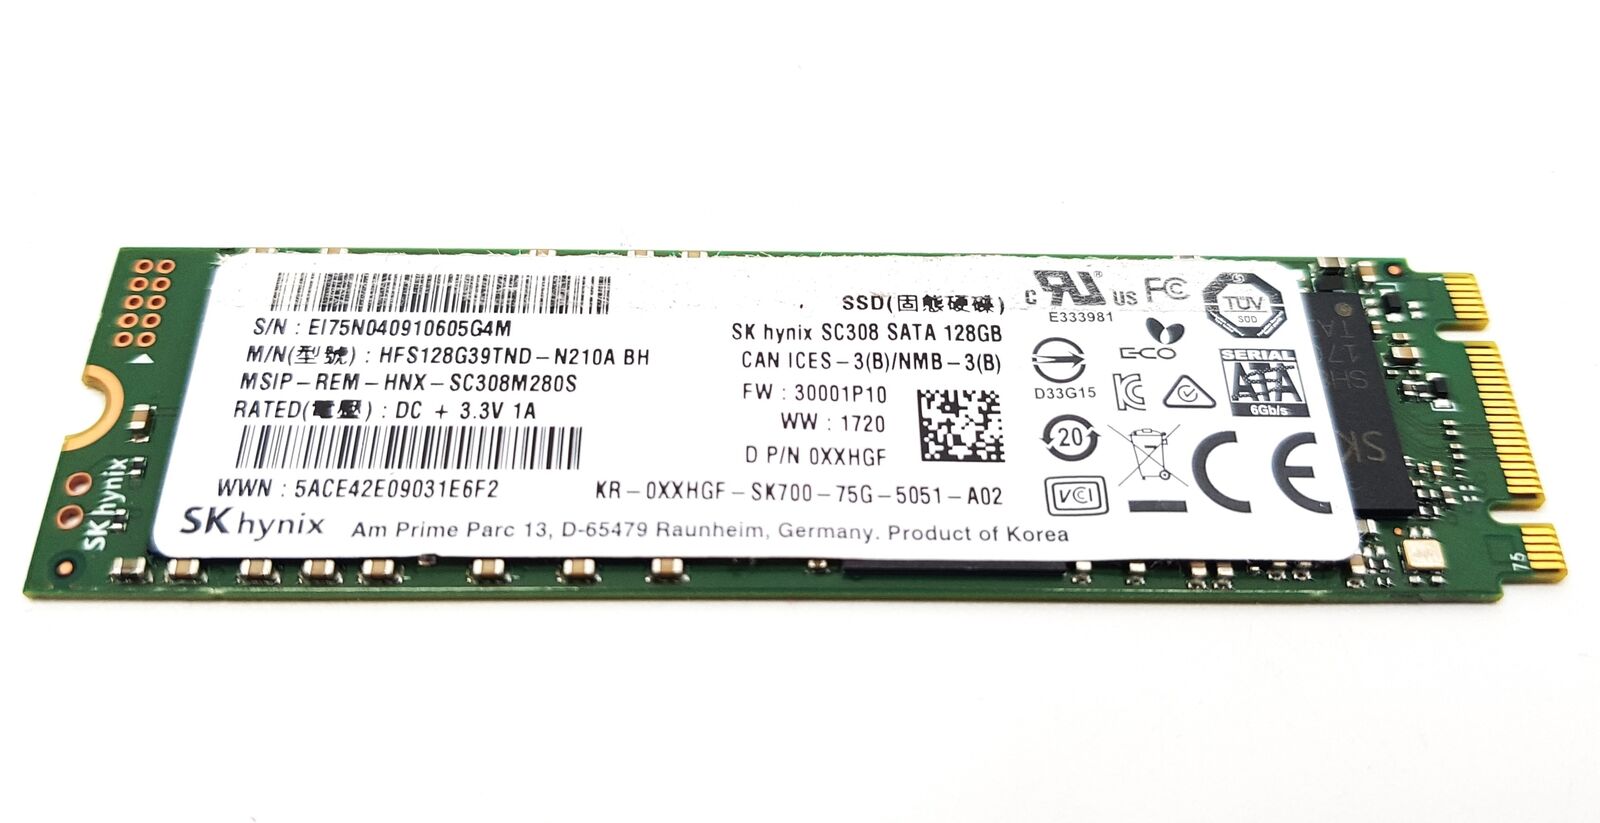 Sk Hynix SC308 SATA 128GB HFS128G39TND-N210A M.2 SSD Solid State Drive 0XXHGF